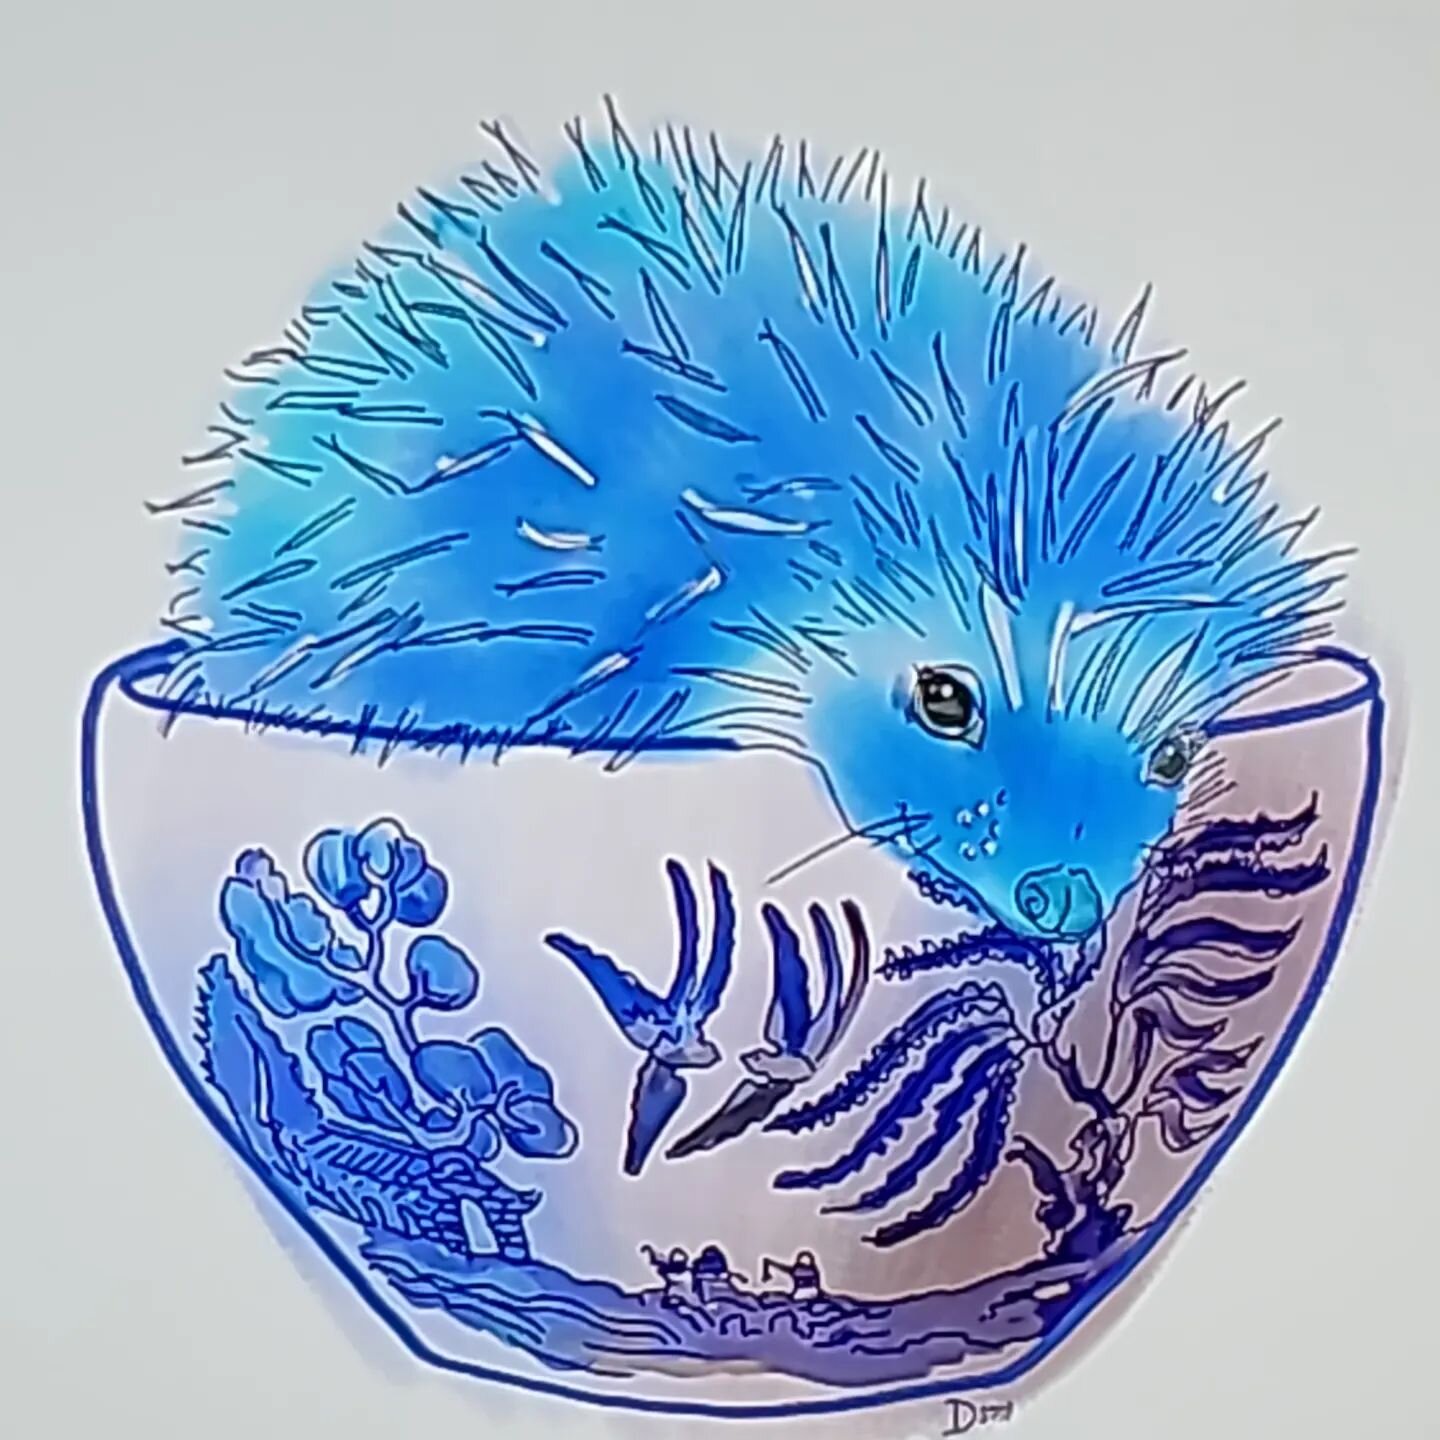 Hedgehog in blue willow bowl #hedgehog #hedgenogofinstagram #bluewillow #donnadavisartbythesea